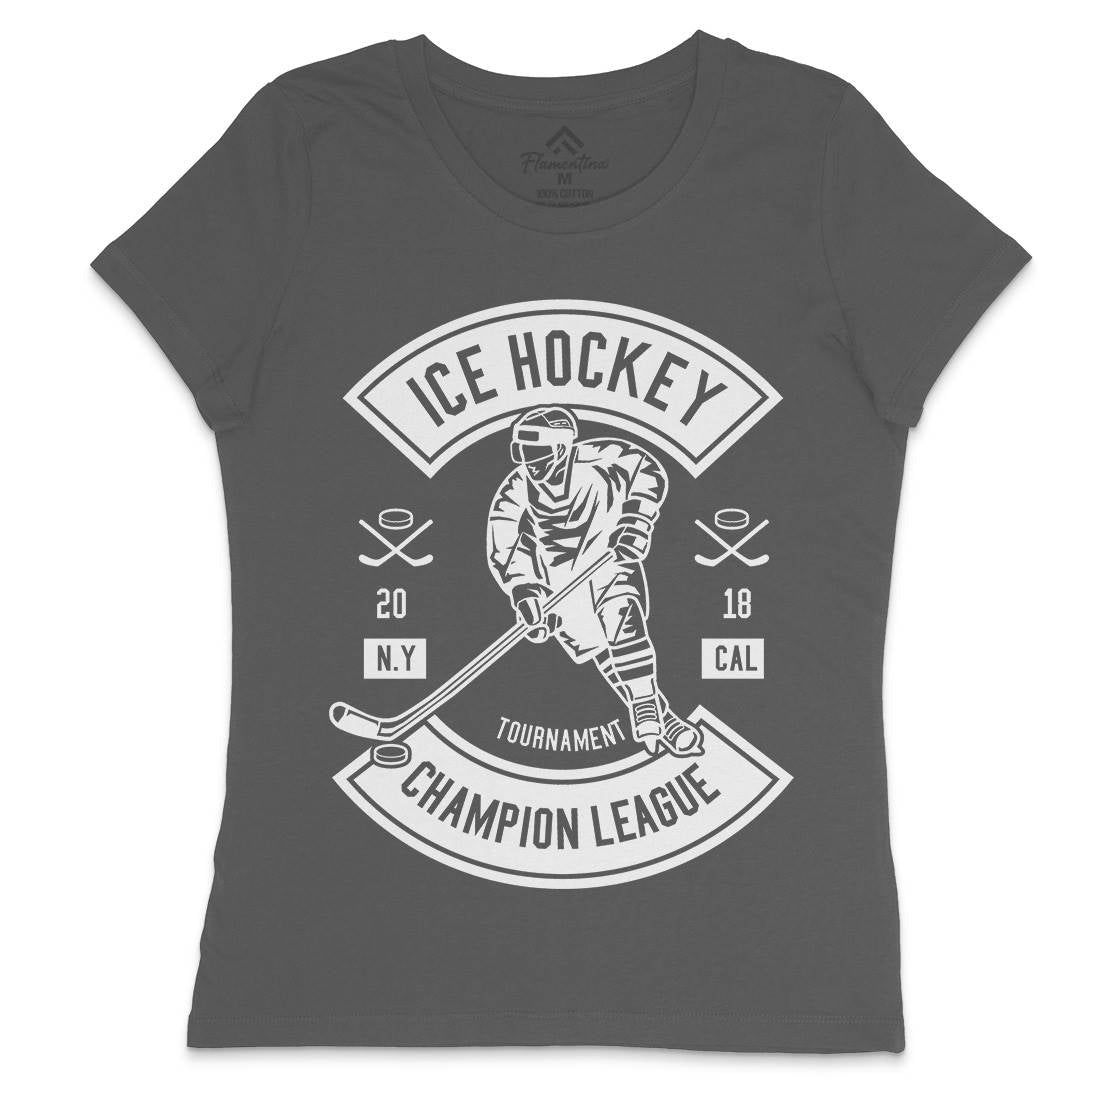 Ice Hockey Champion League Womens Crew Neck T-Shirt Sport B564